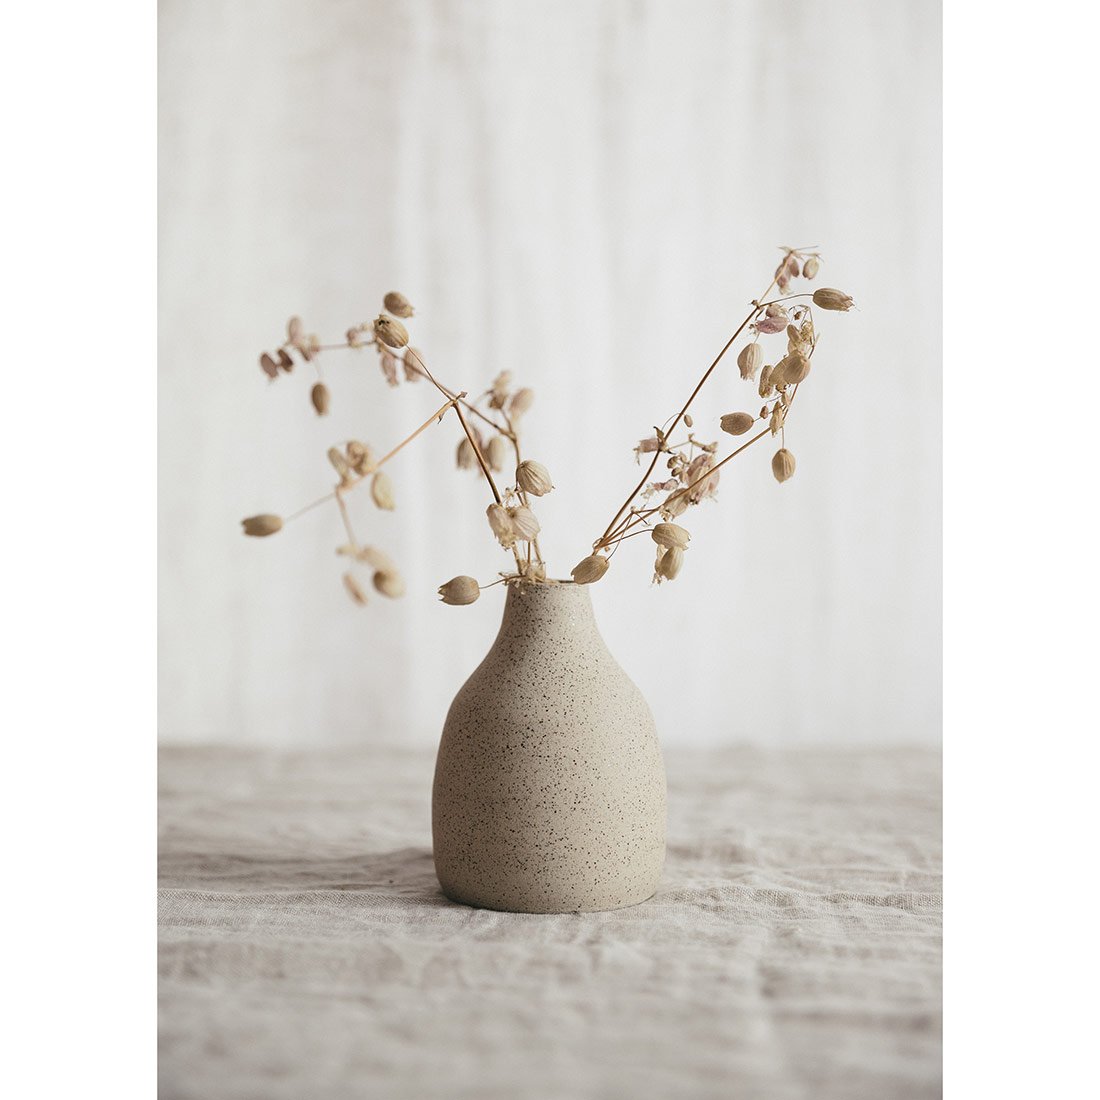 First Light Ceramic Vase